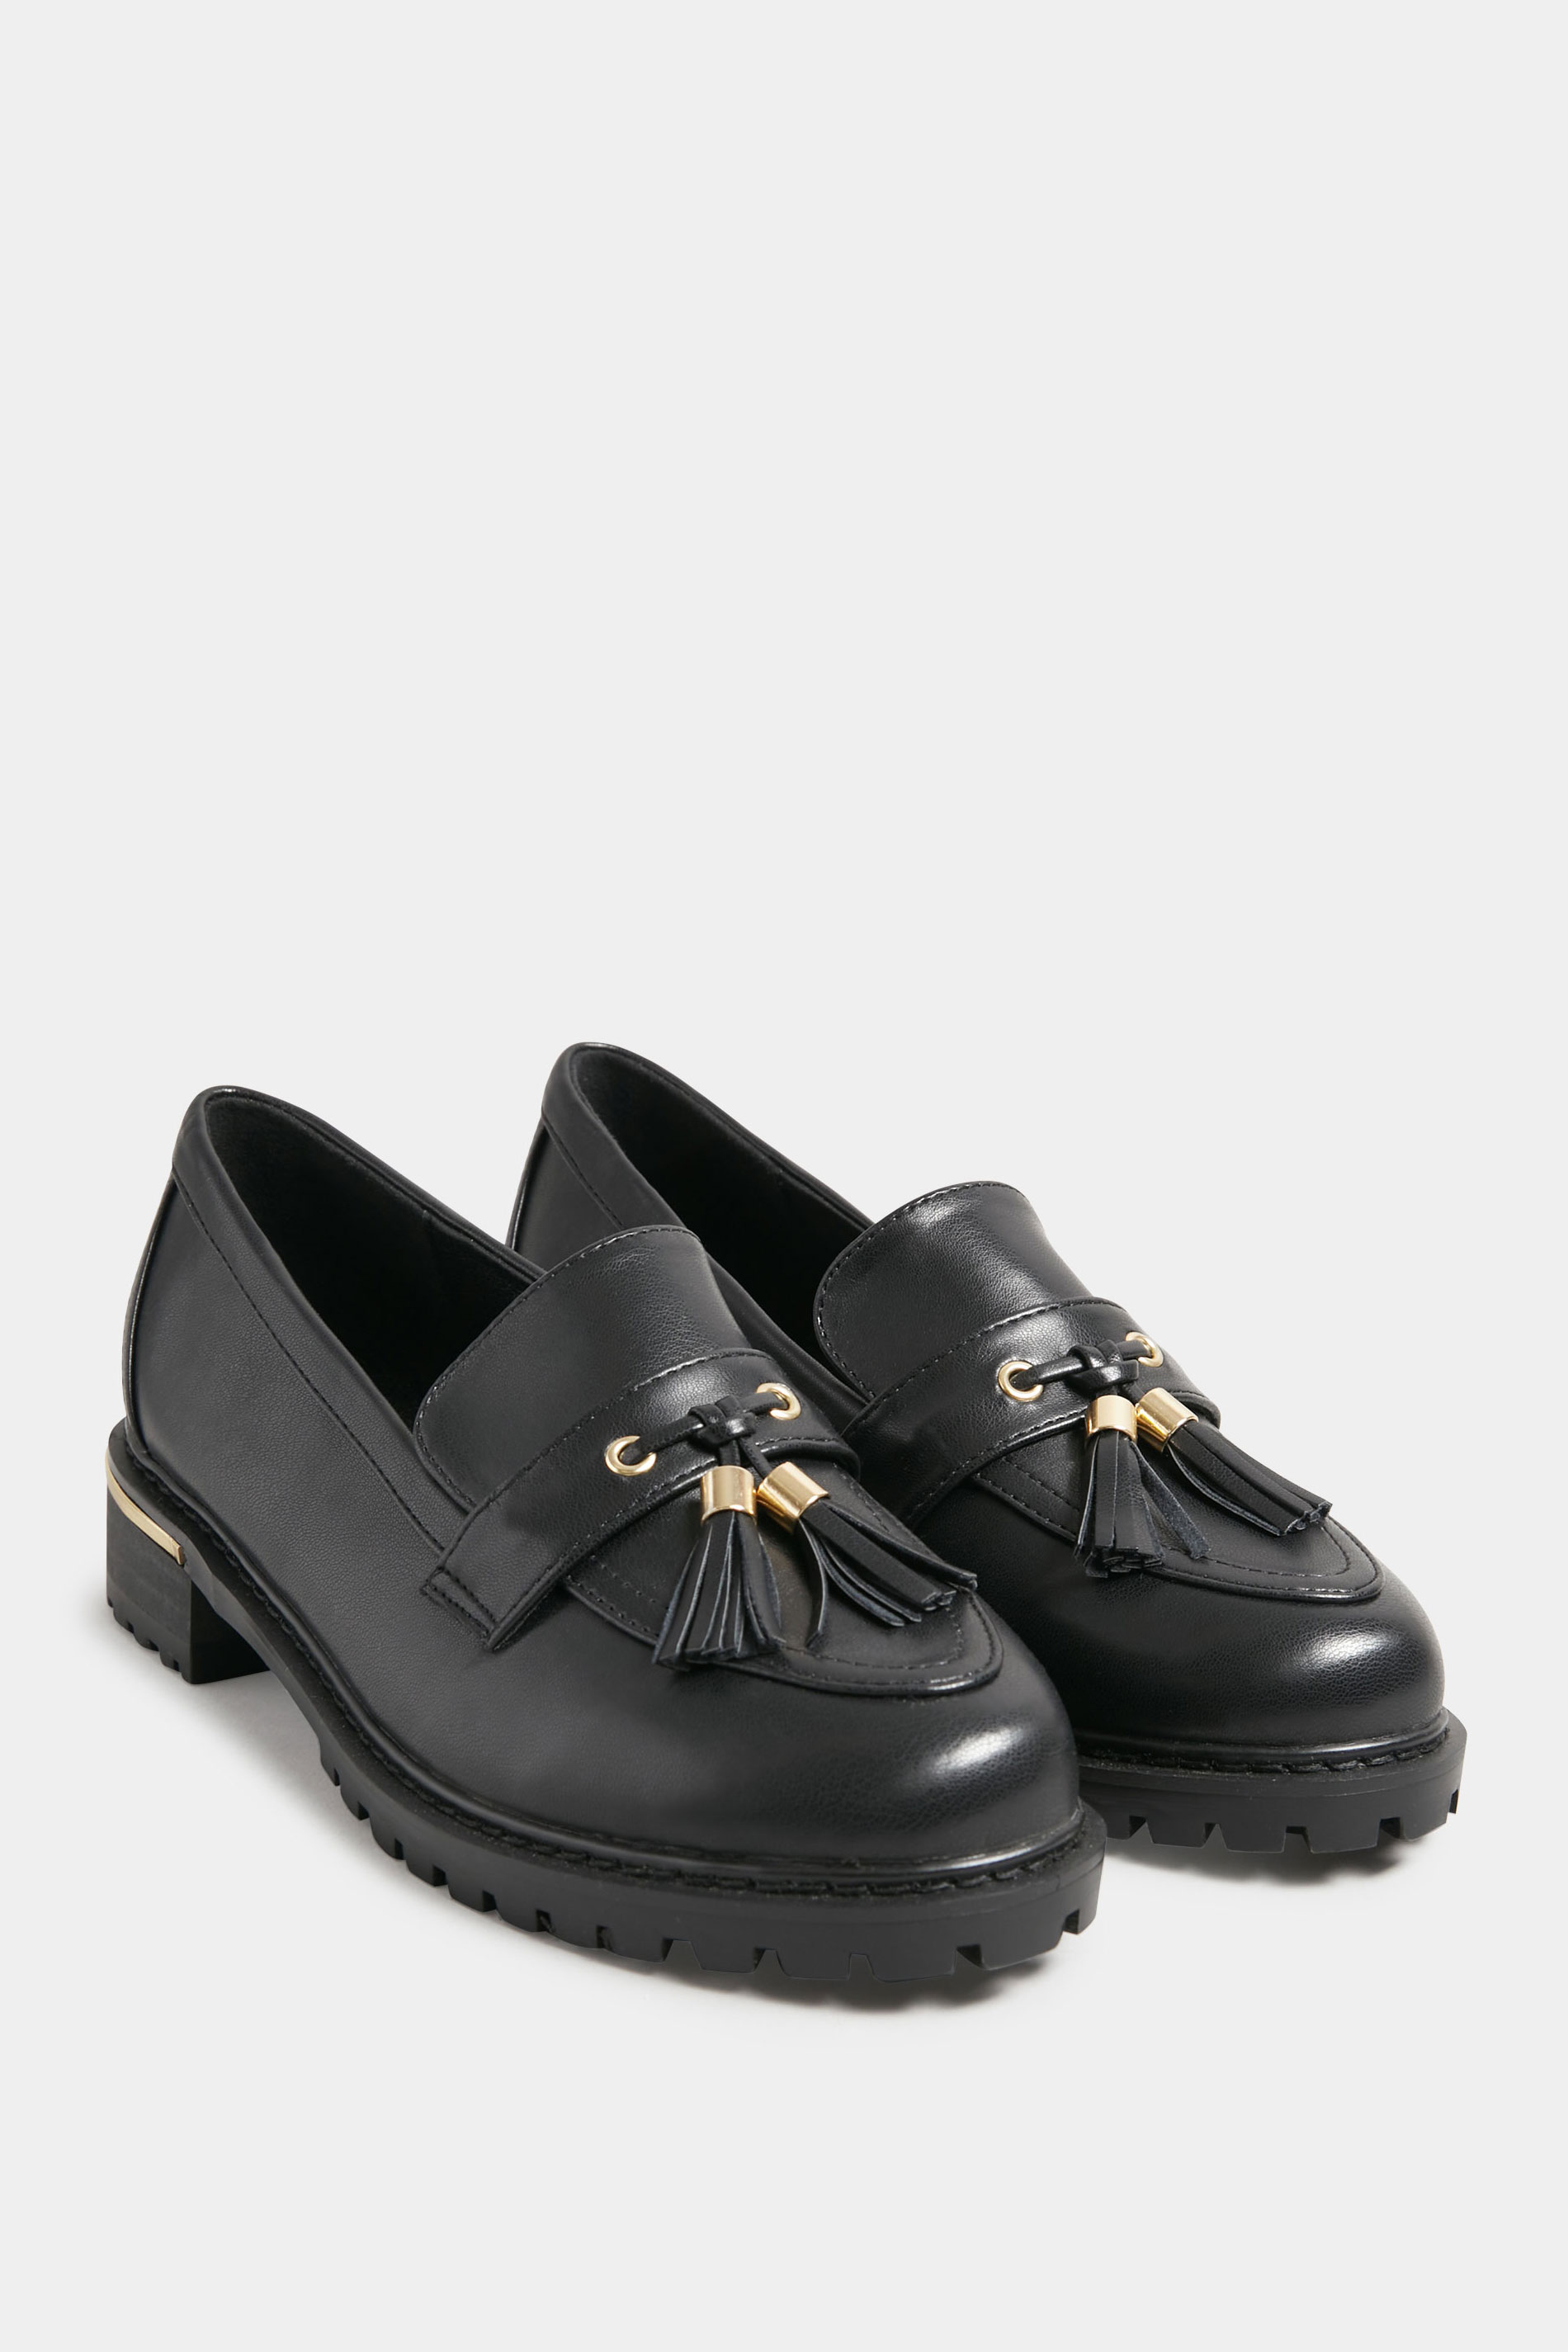 LTS Black Tassel Loafers In Standard Fit | Long Tall Sally 2